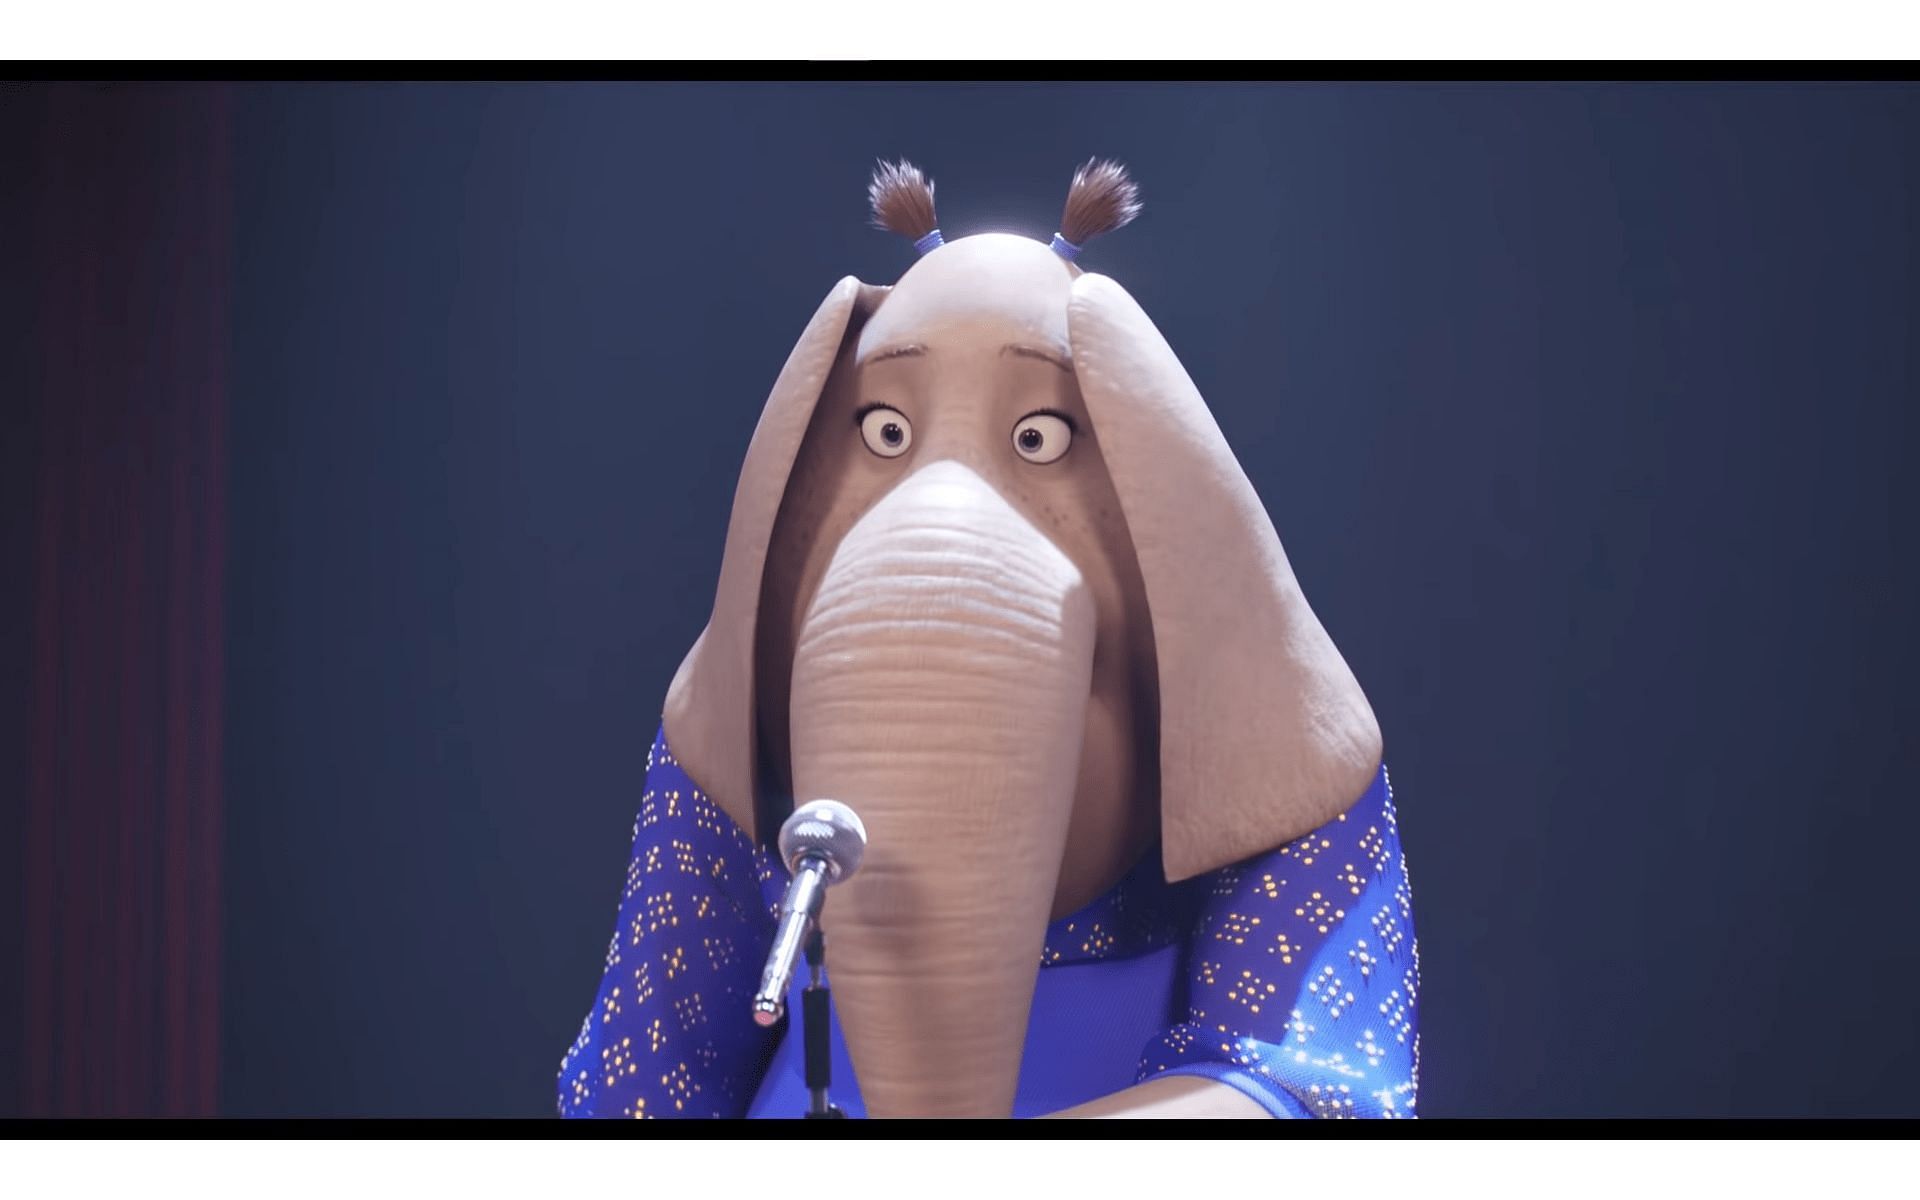 Why did TikTok cancel Meena, the cartoon elephant from 'Sing'?